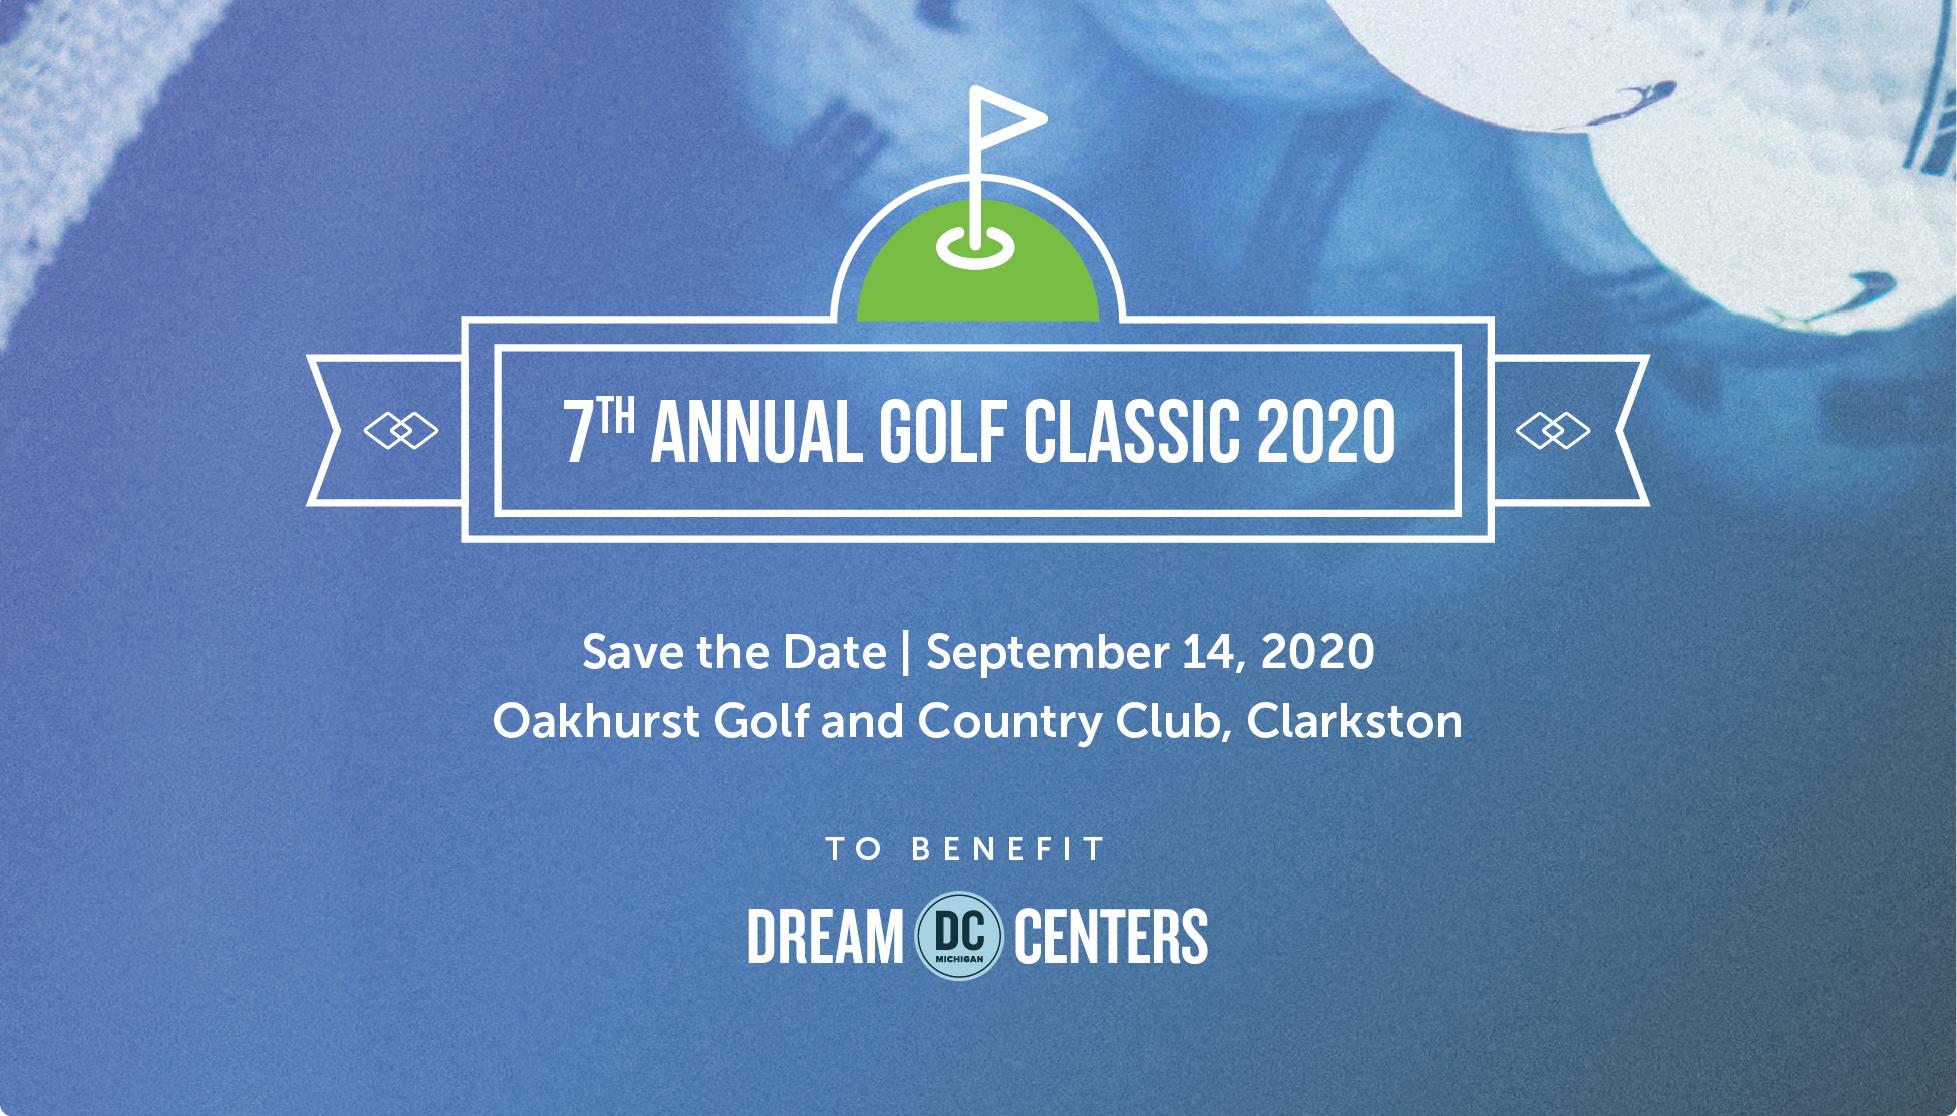 7th Annual Golf Classic 2020